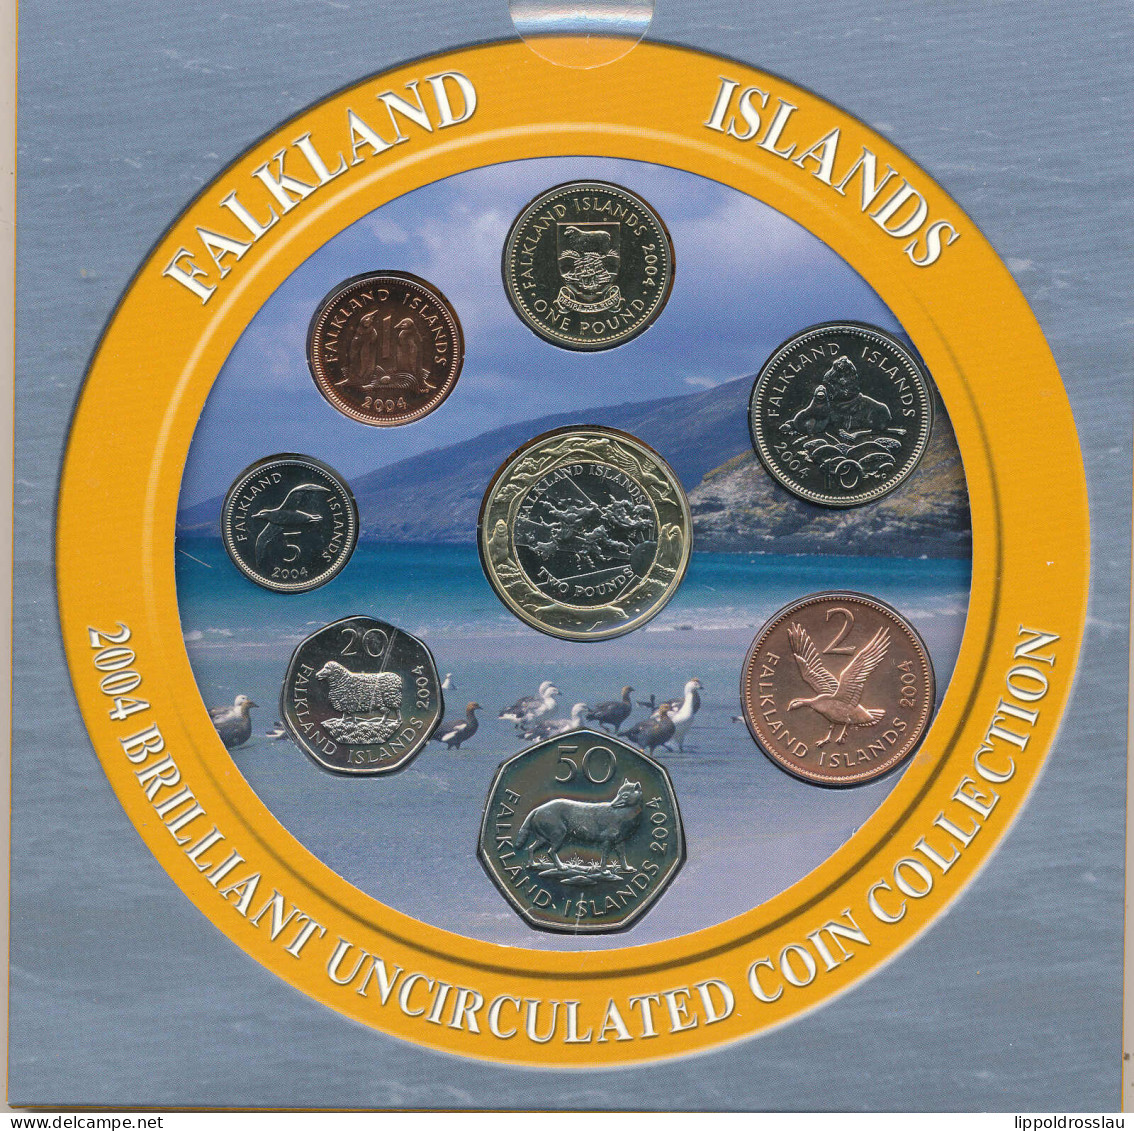 FALKLANDINSELN 2004 BRILLANT UNZIRKULIERTE MÜNZSAMMLUNG Set 8x Münzen 1 Penny ~ £ 2 Pfund BUNC - Falkland